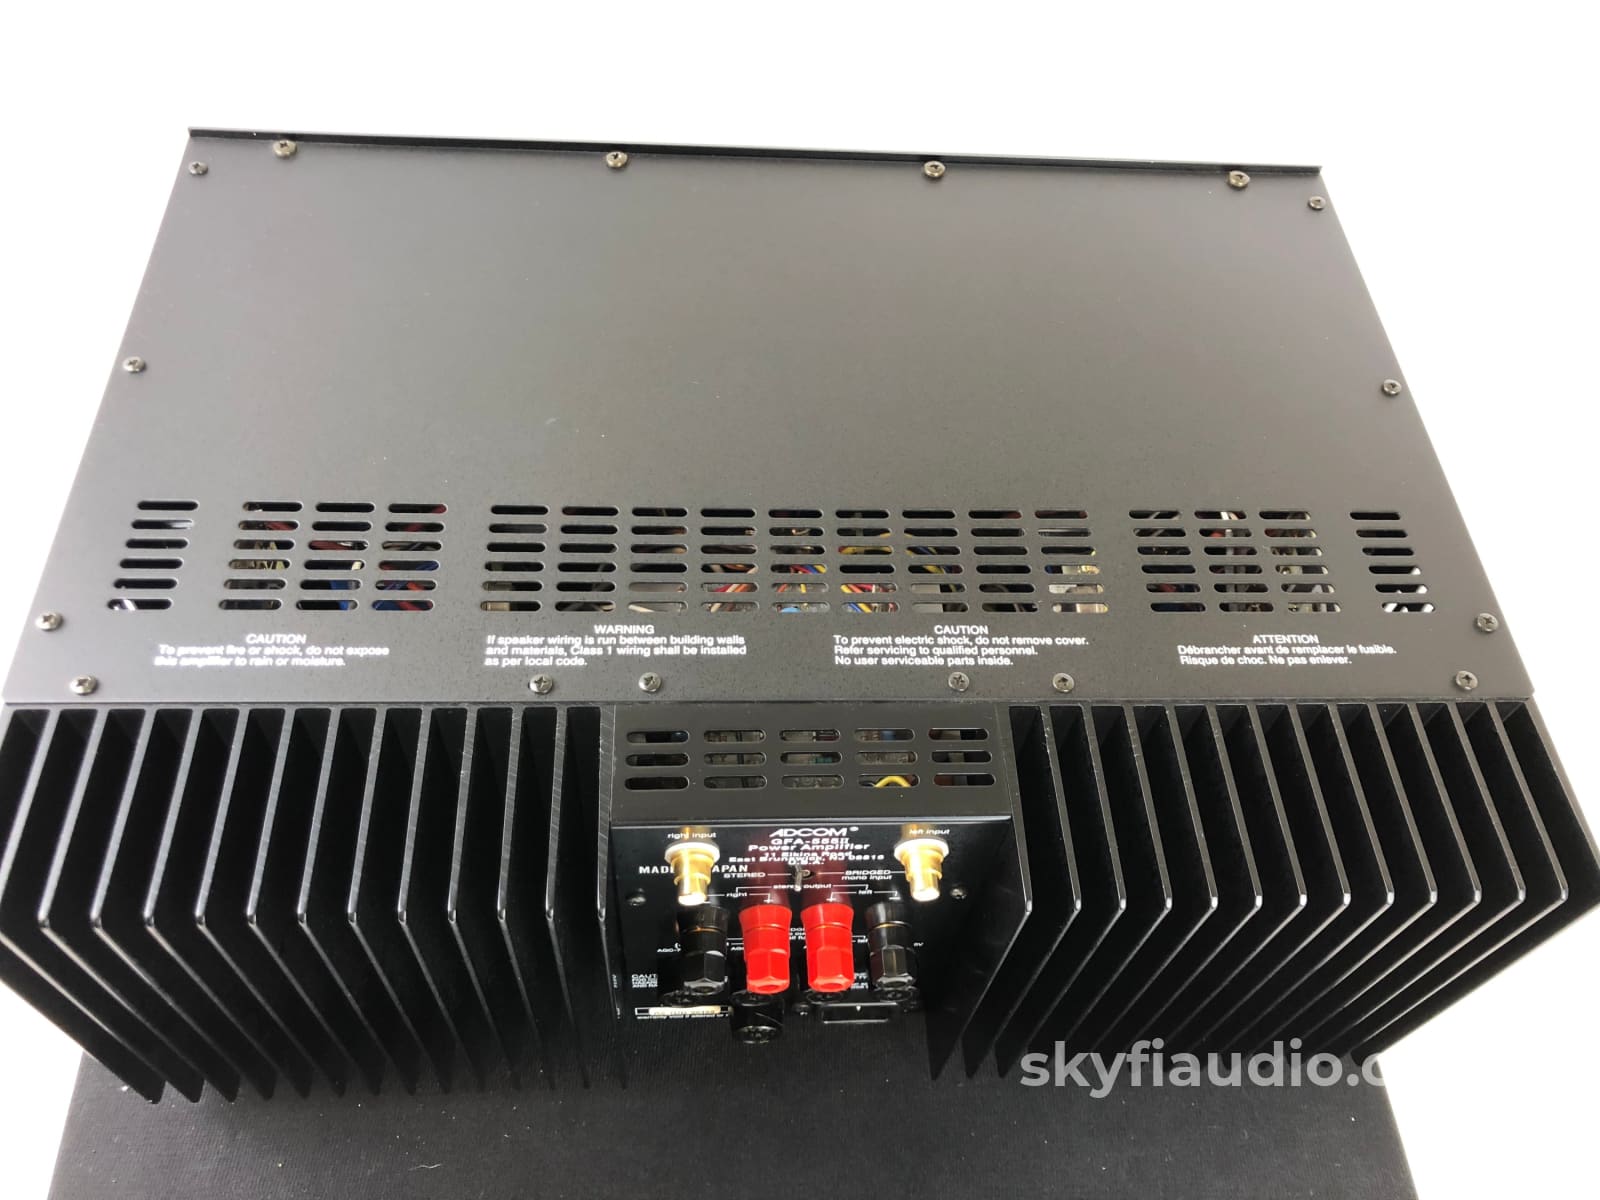 Adcom Gfa-555 Mkii Stereo Amplifier In Box